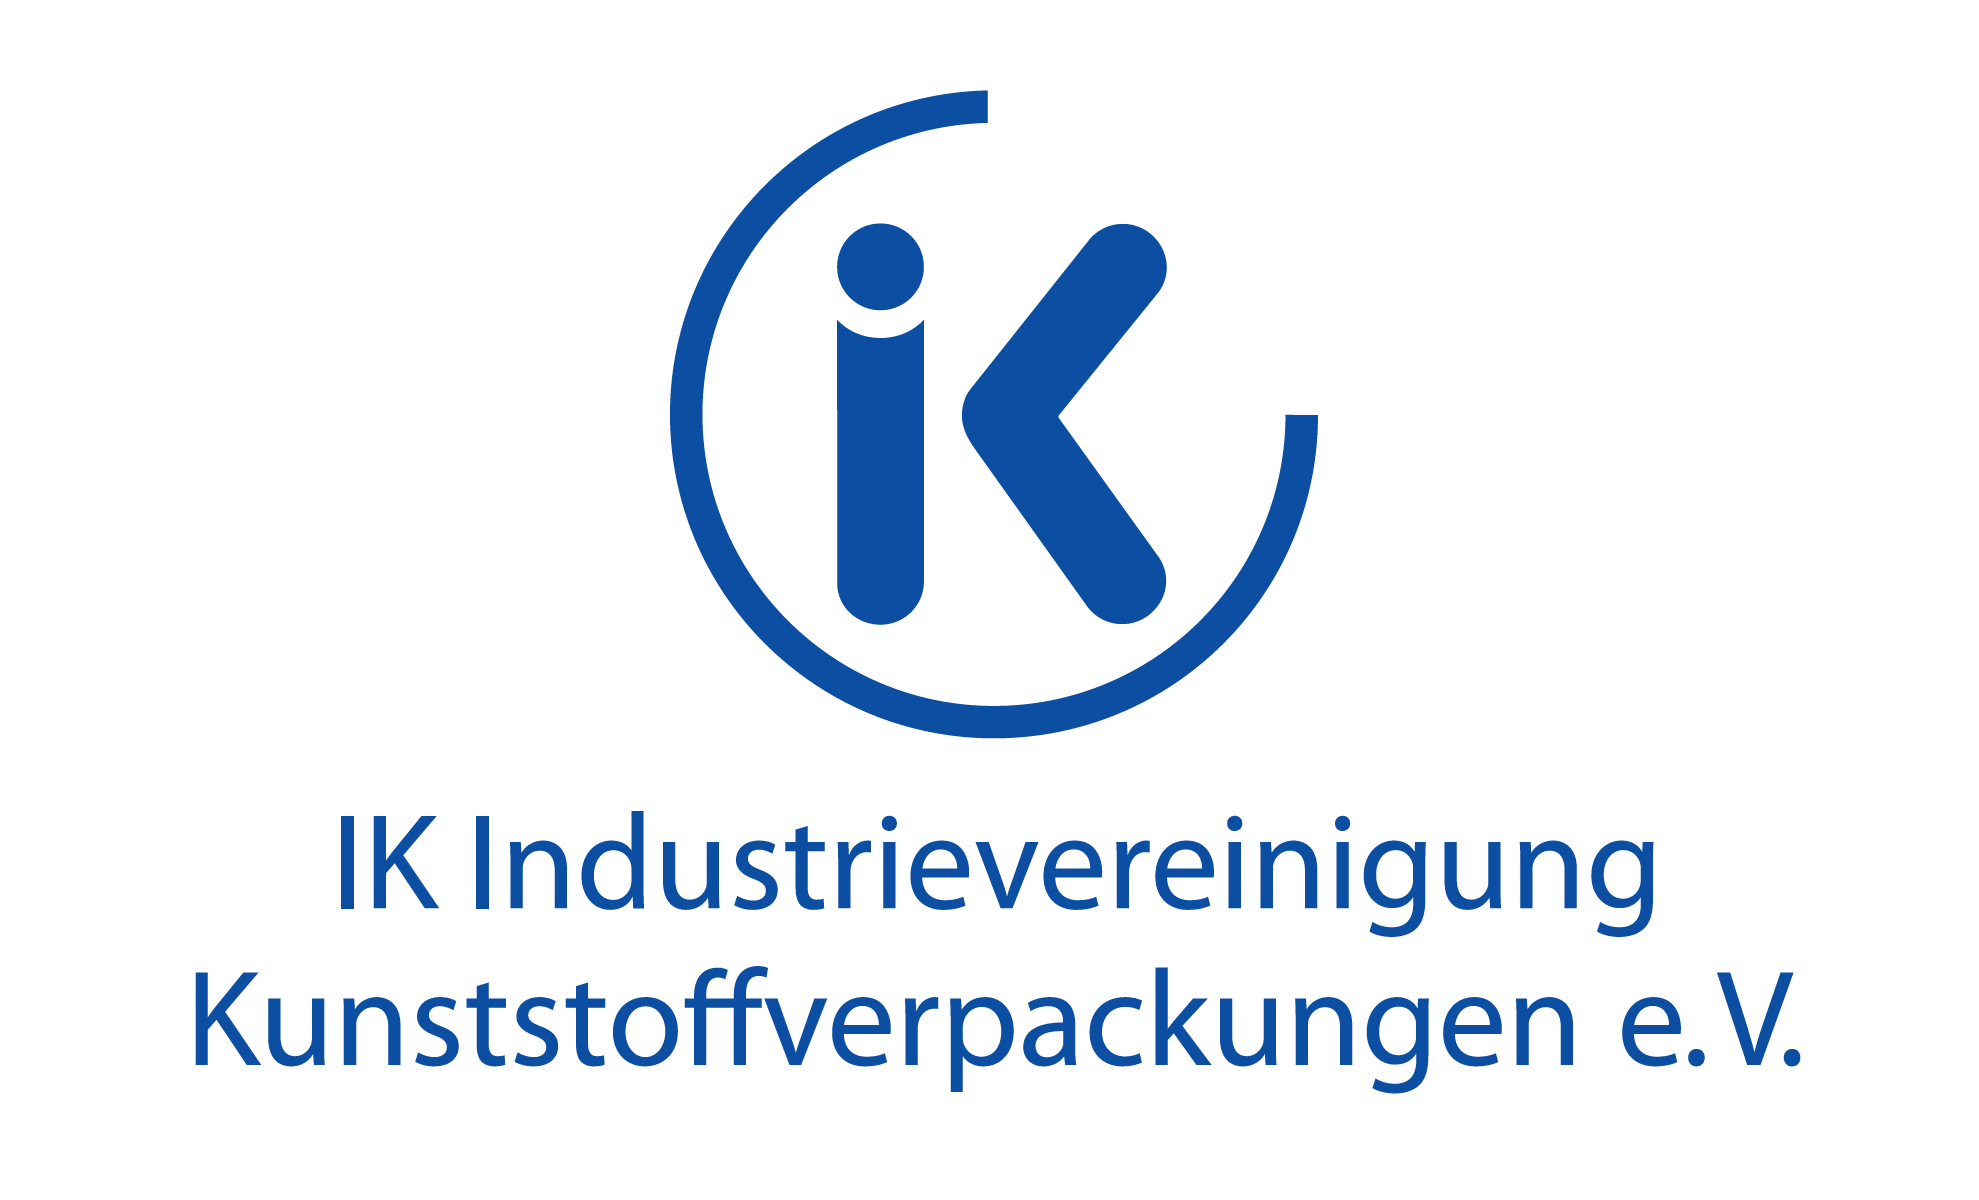 Welcome to the Industrievereinigung Kunststoffverpackungen